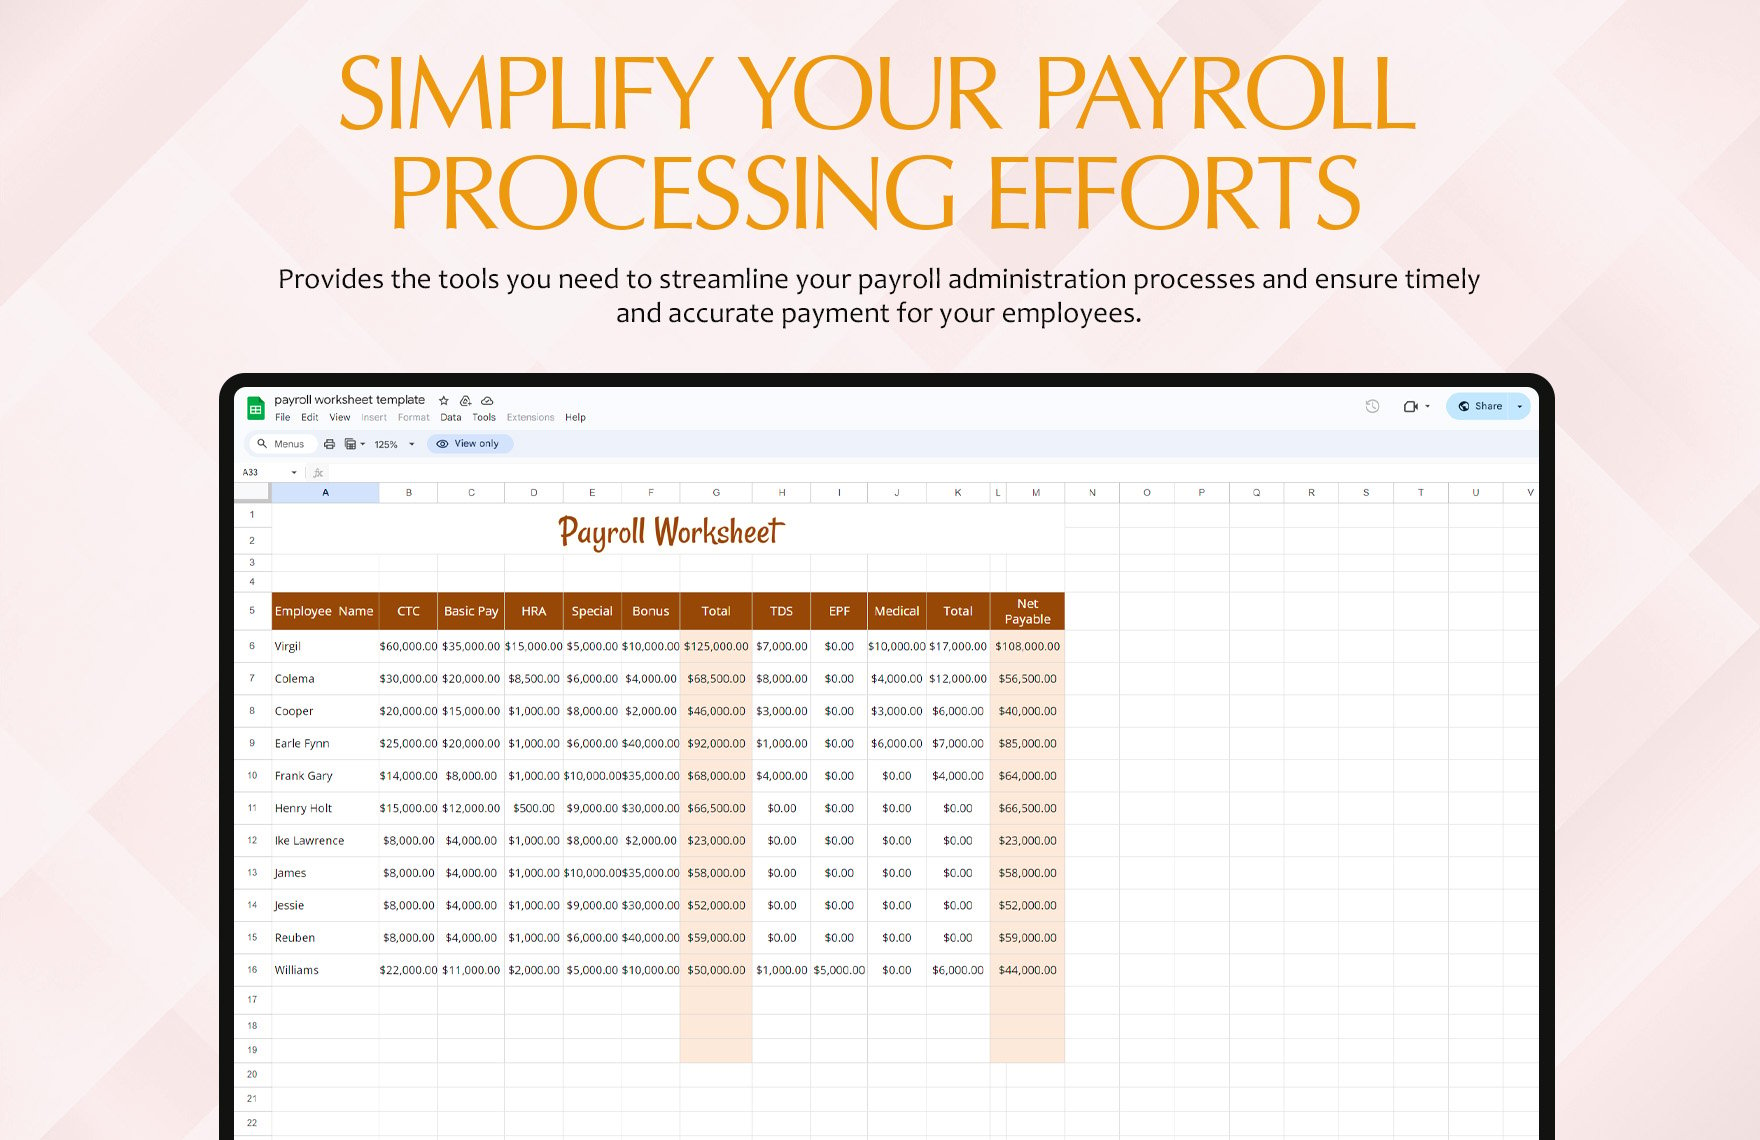 Payroll Worksheet Template